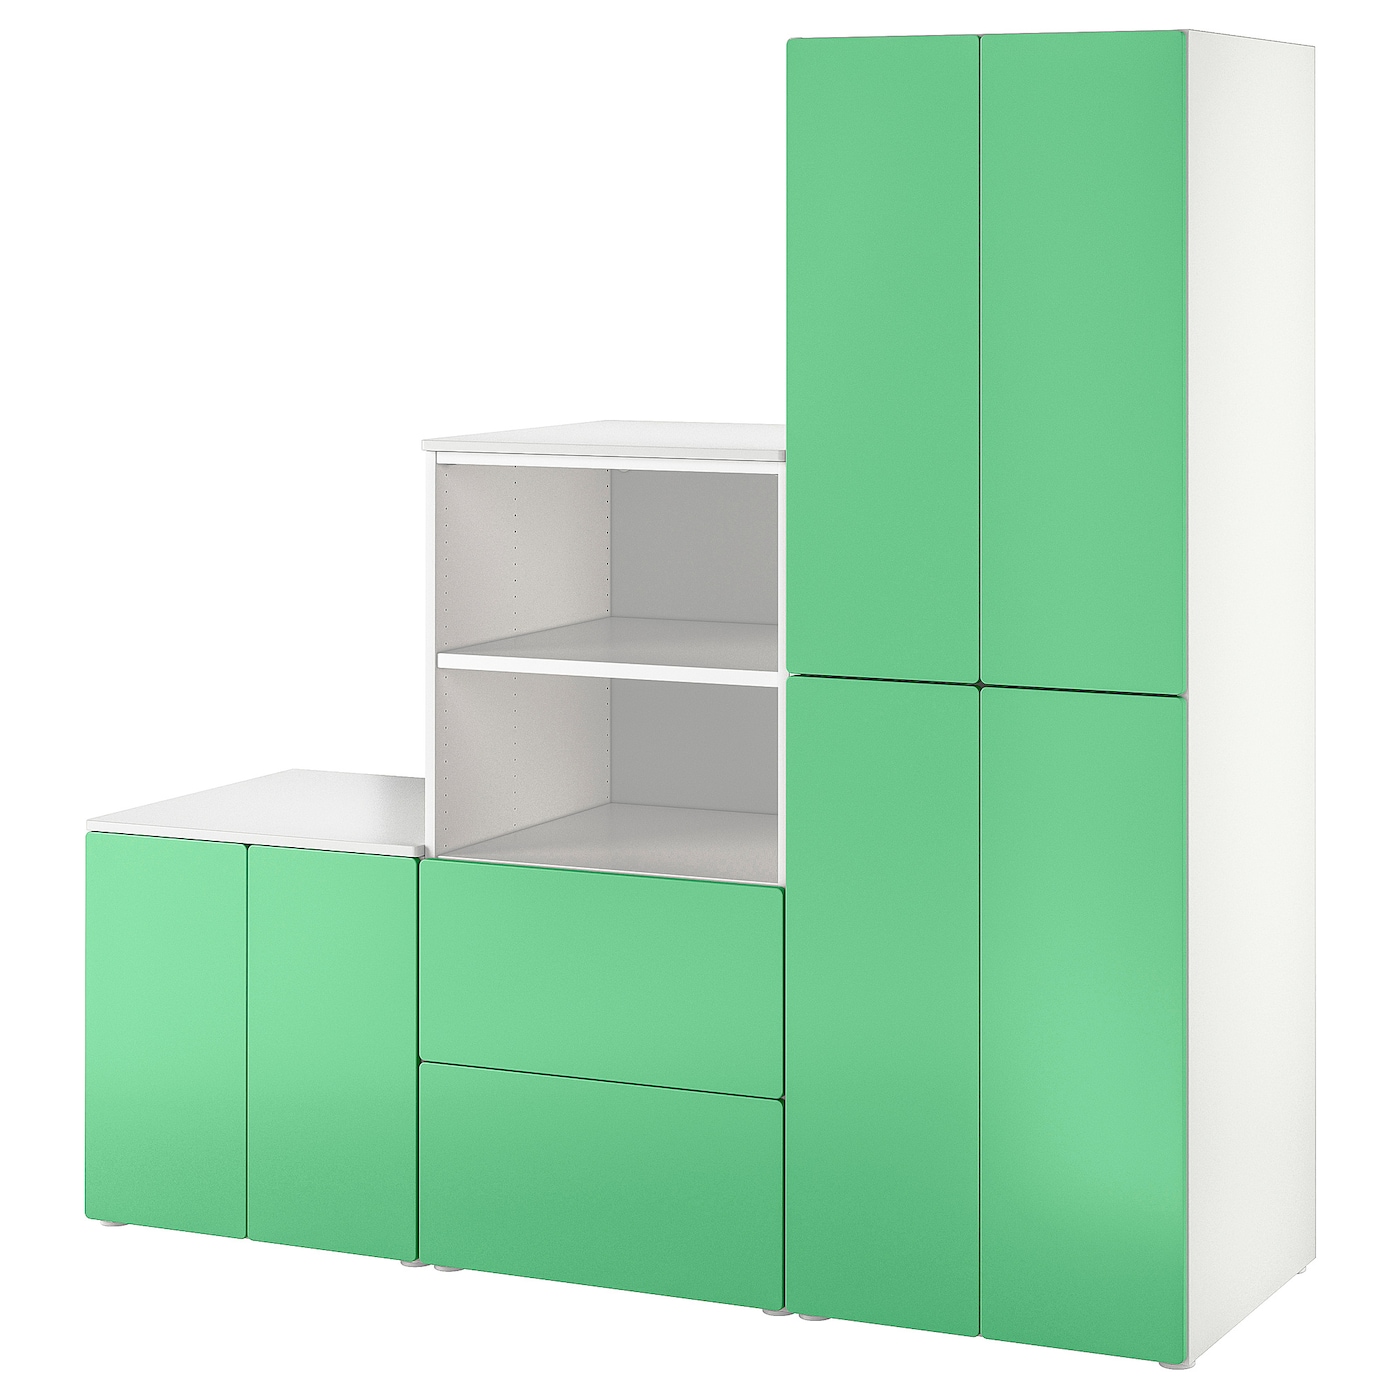 Шкаф - PLATSA/ SMÅSTAD / SMАSTAD  IKEA/ ПЛАТСА/СМОСТАД  ИКЕА, 180x57x181 см, белый/зеленый